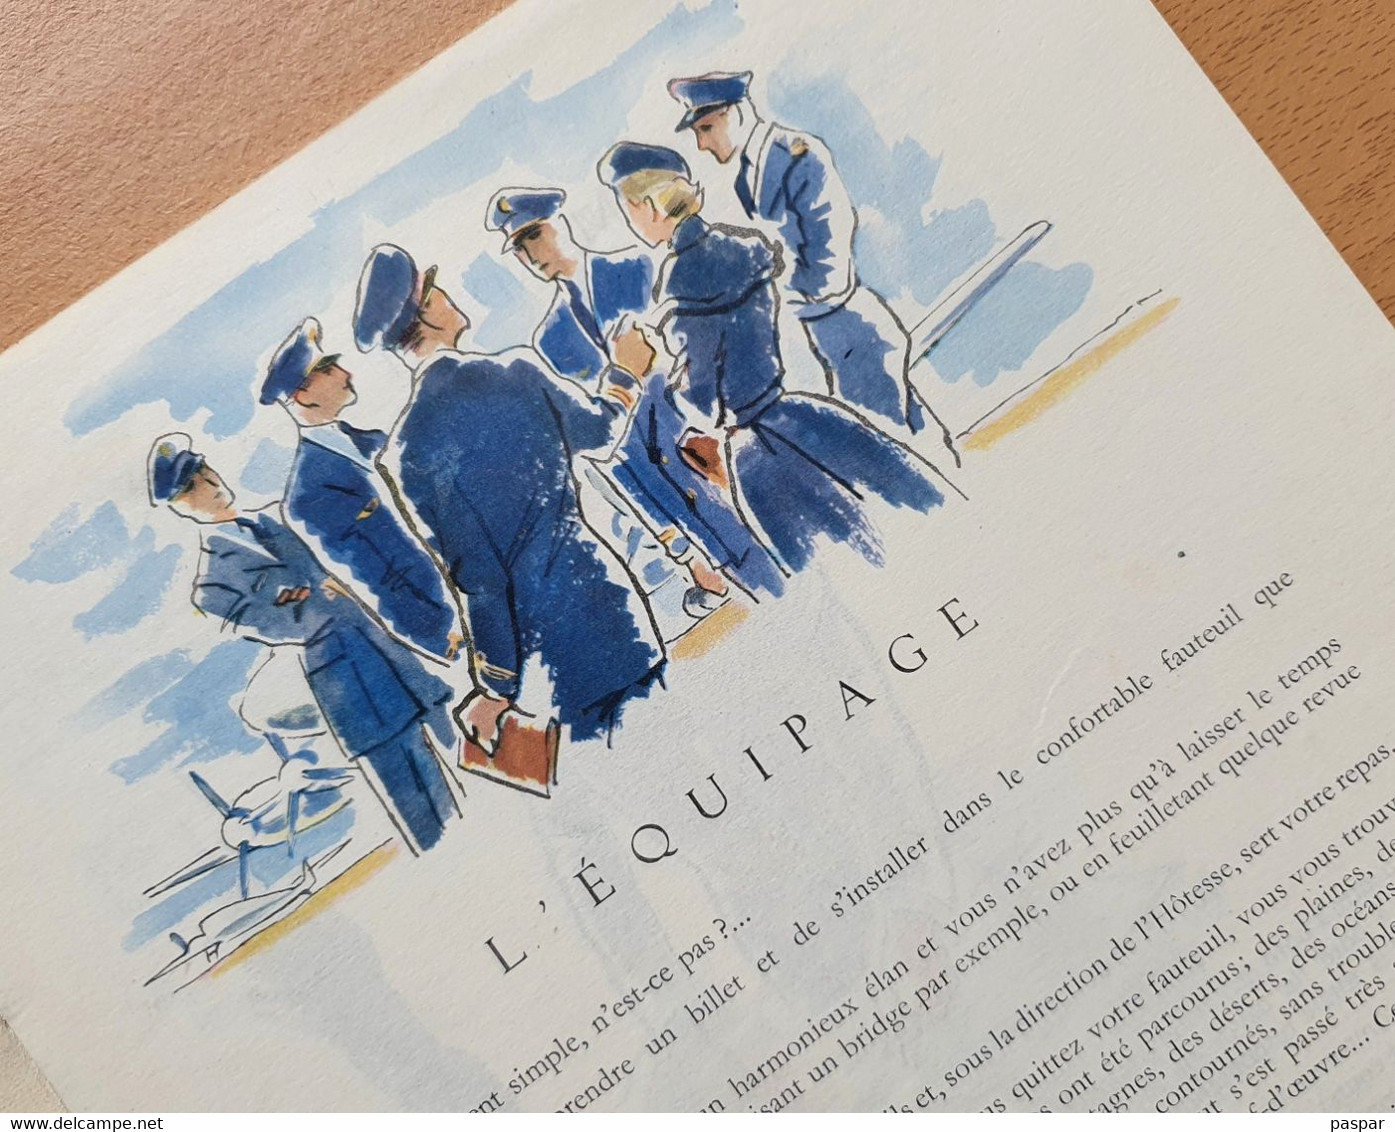 Brochure Air France - L'équipage - 1948 - Advertisements